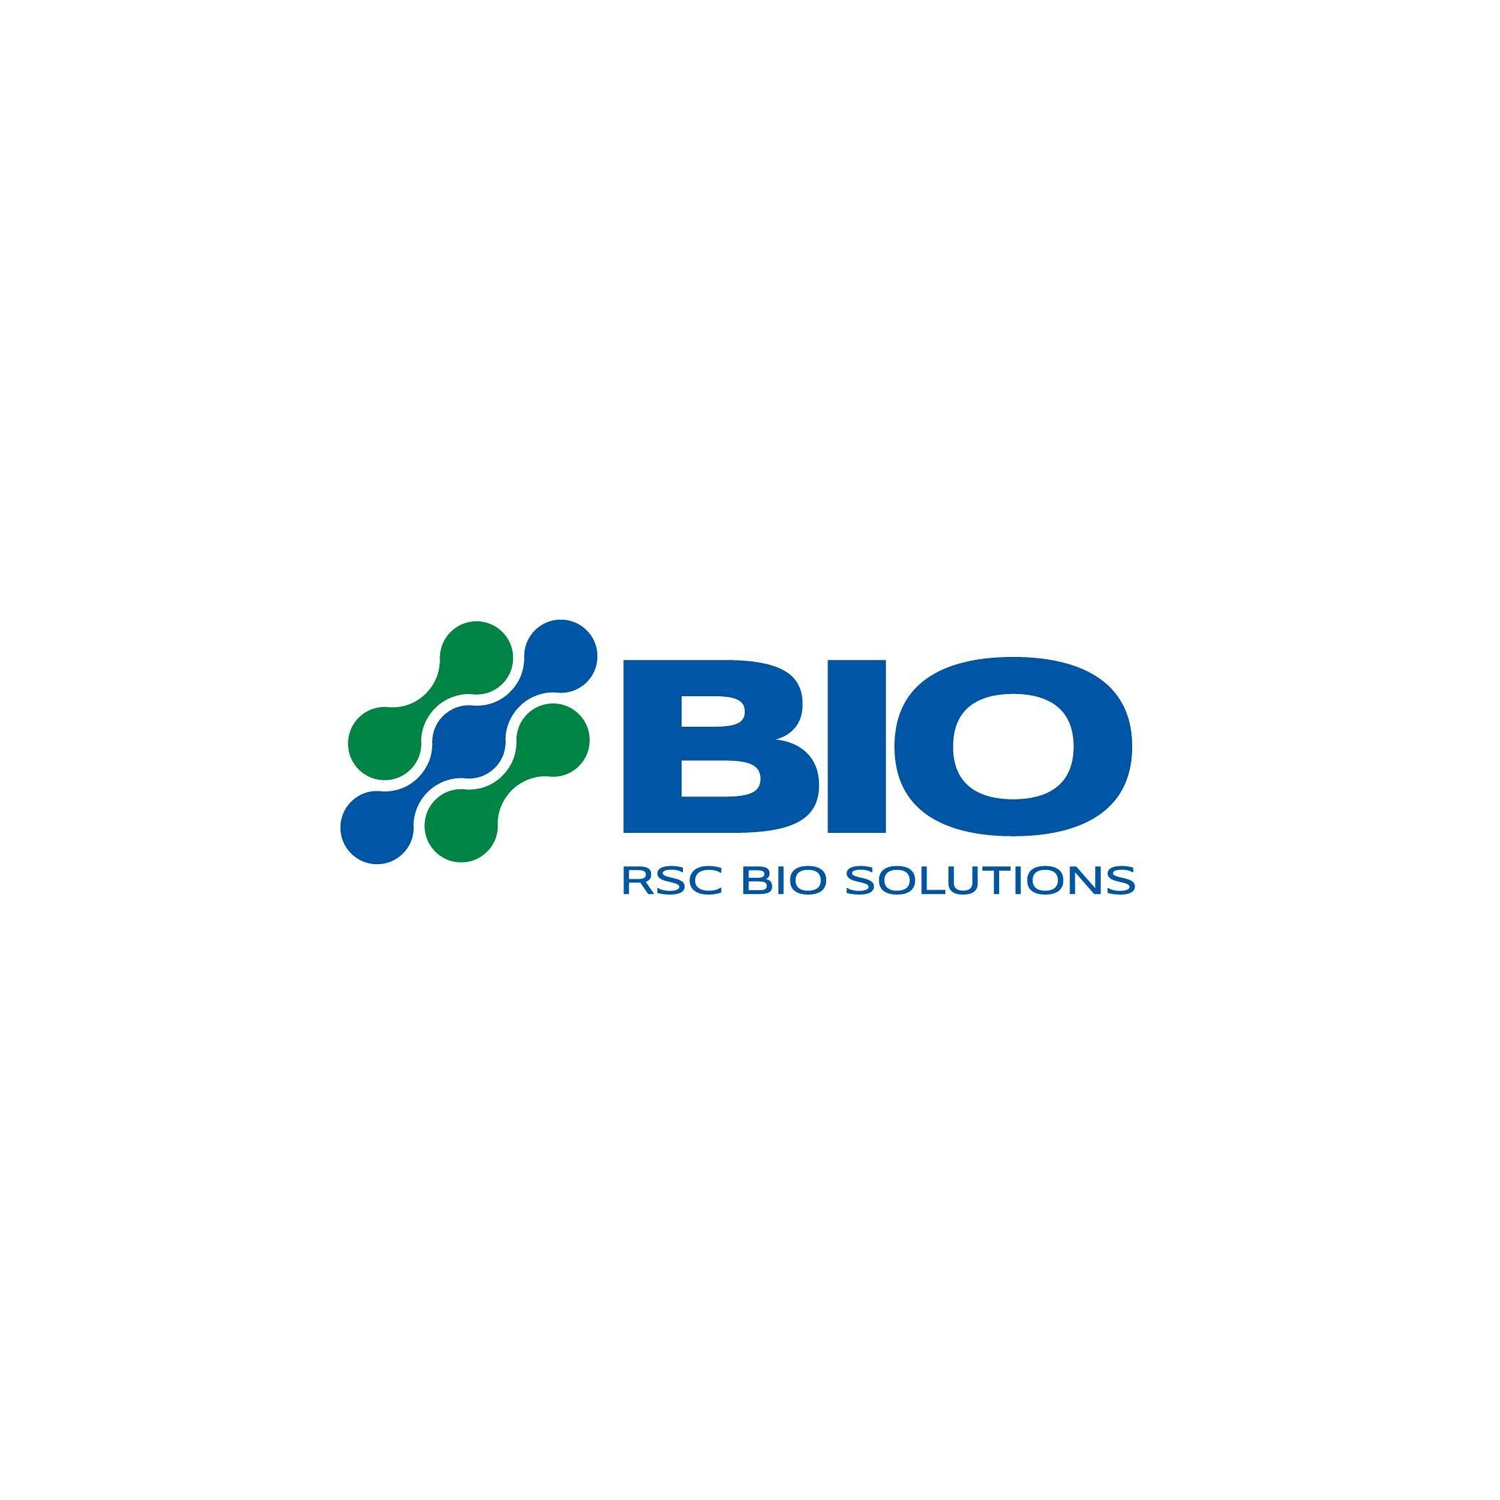 RSC Bio Solutions